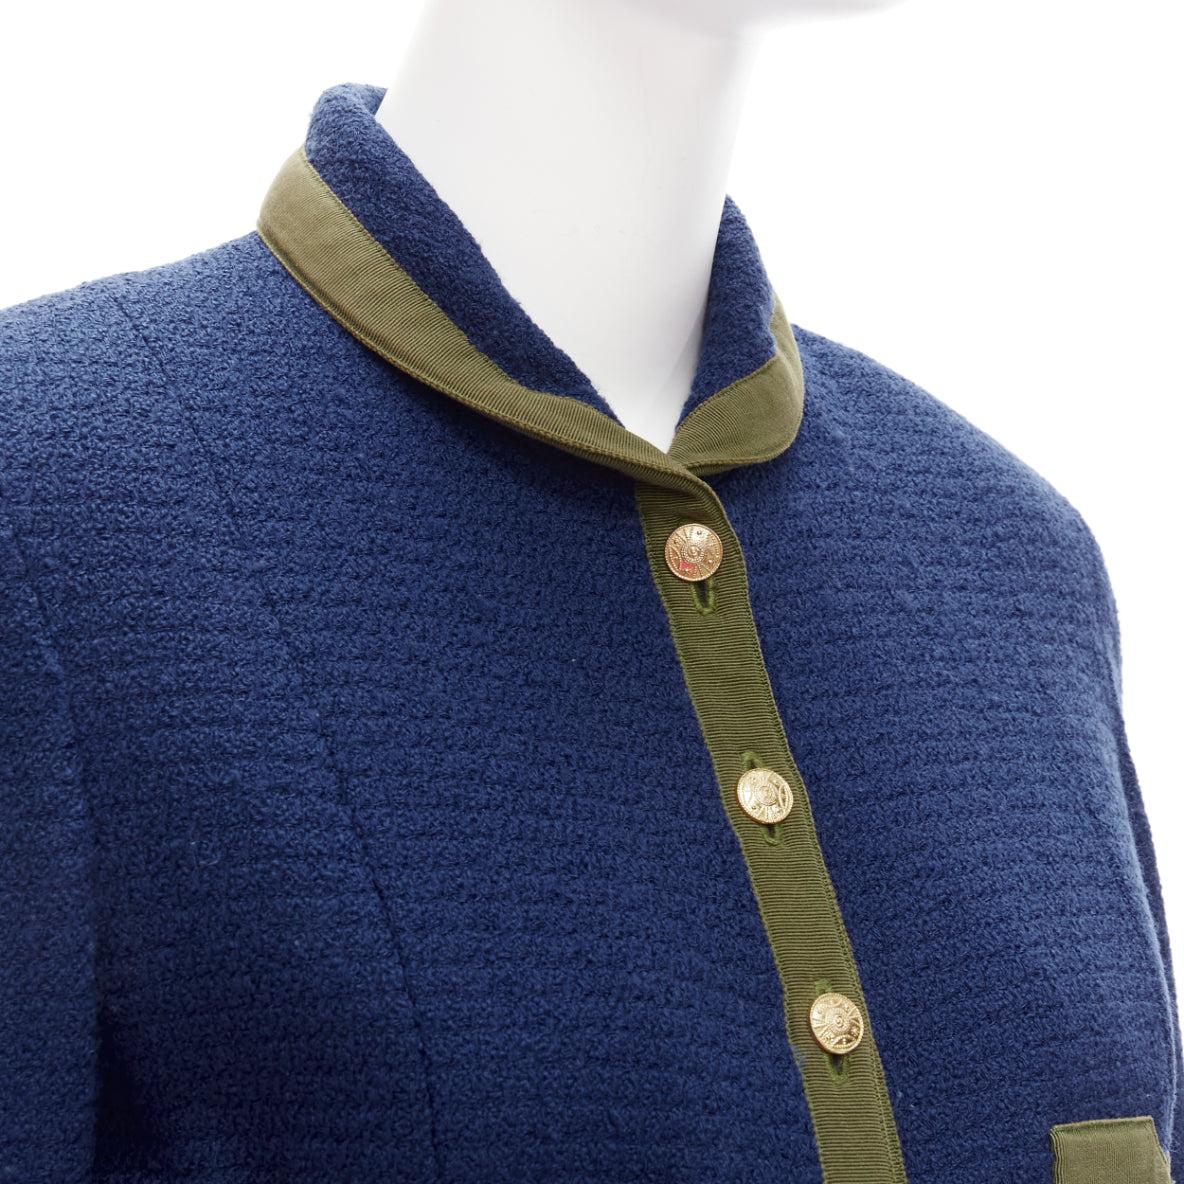 CHANEL Vintage 28931 navy green blue 4 pocket wool tweed jacket FR36 S 4